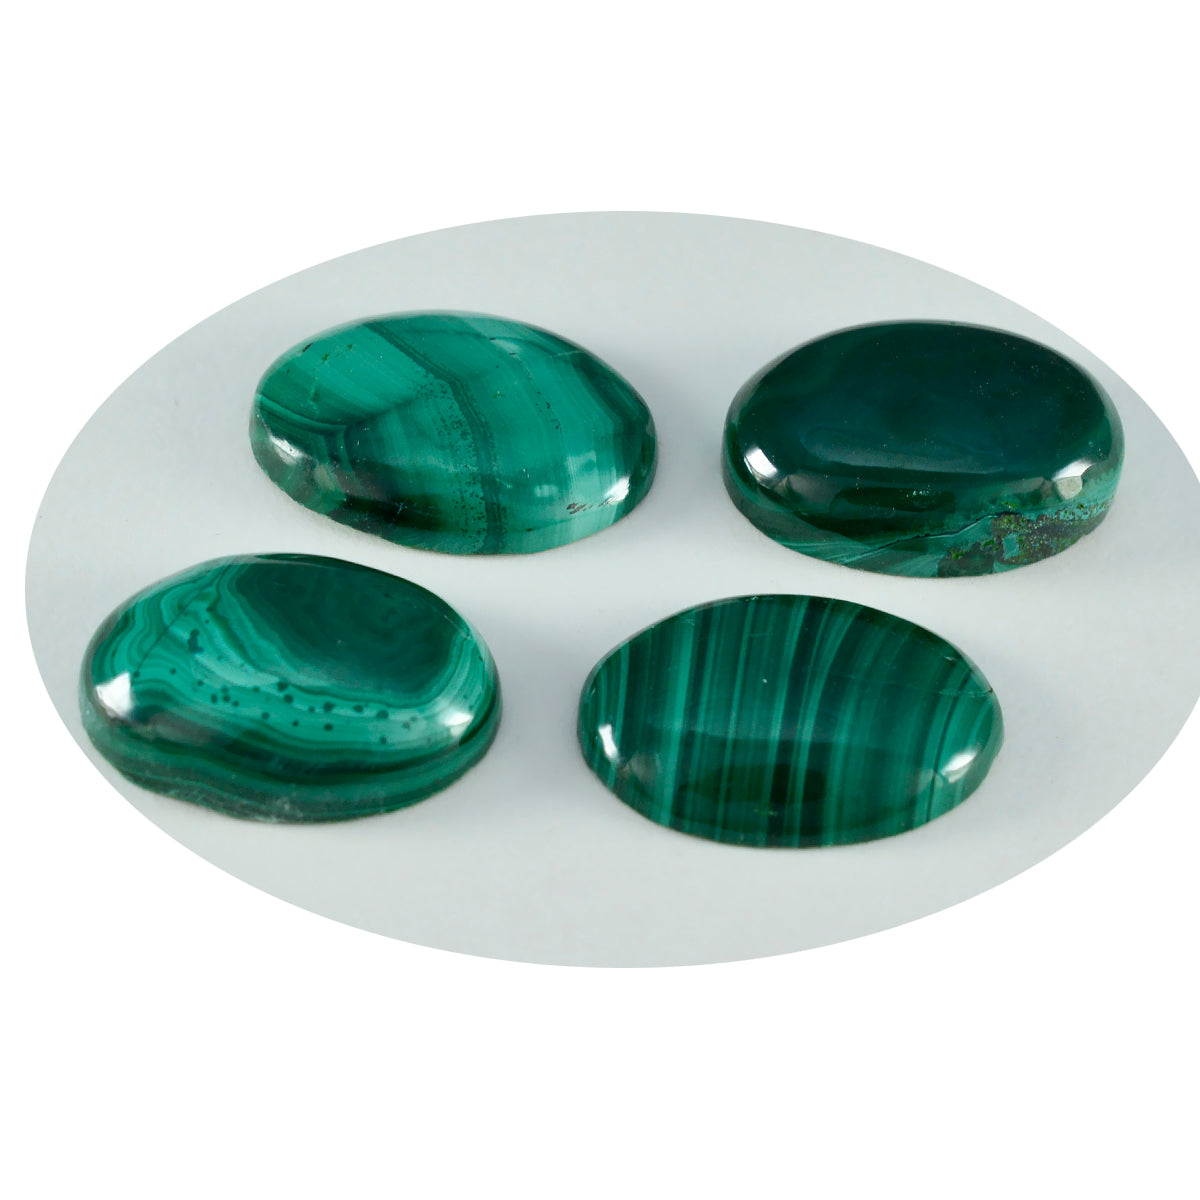 Riyogems 1PC Green Malachite Cabochon 10x14 mm Oval Shape AA Quality Loose Gemstone